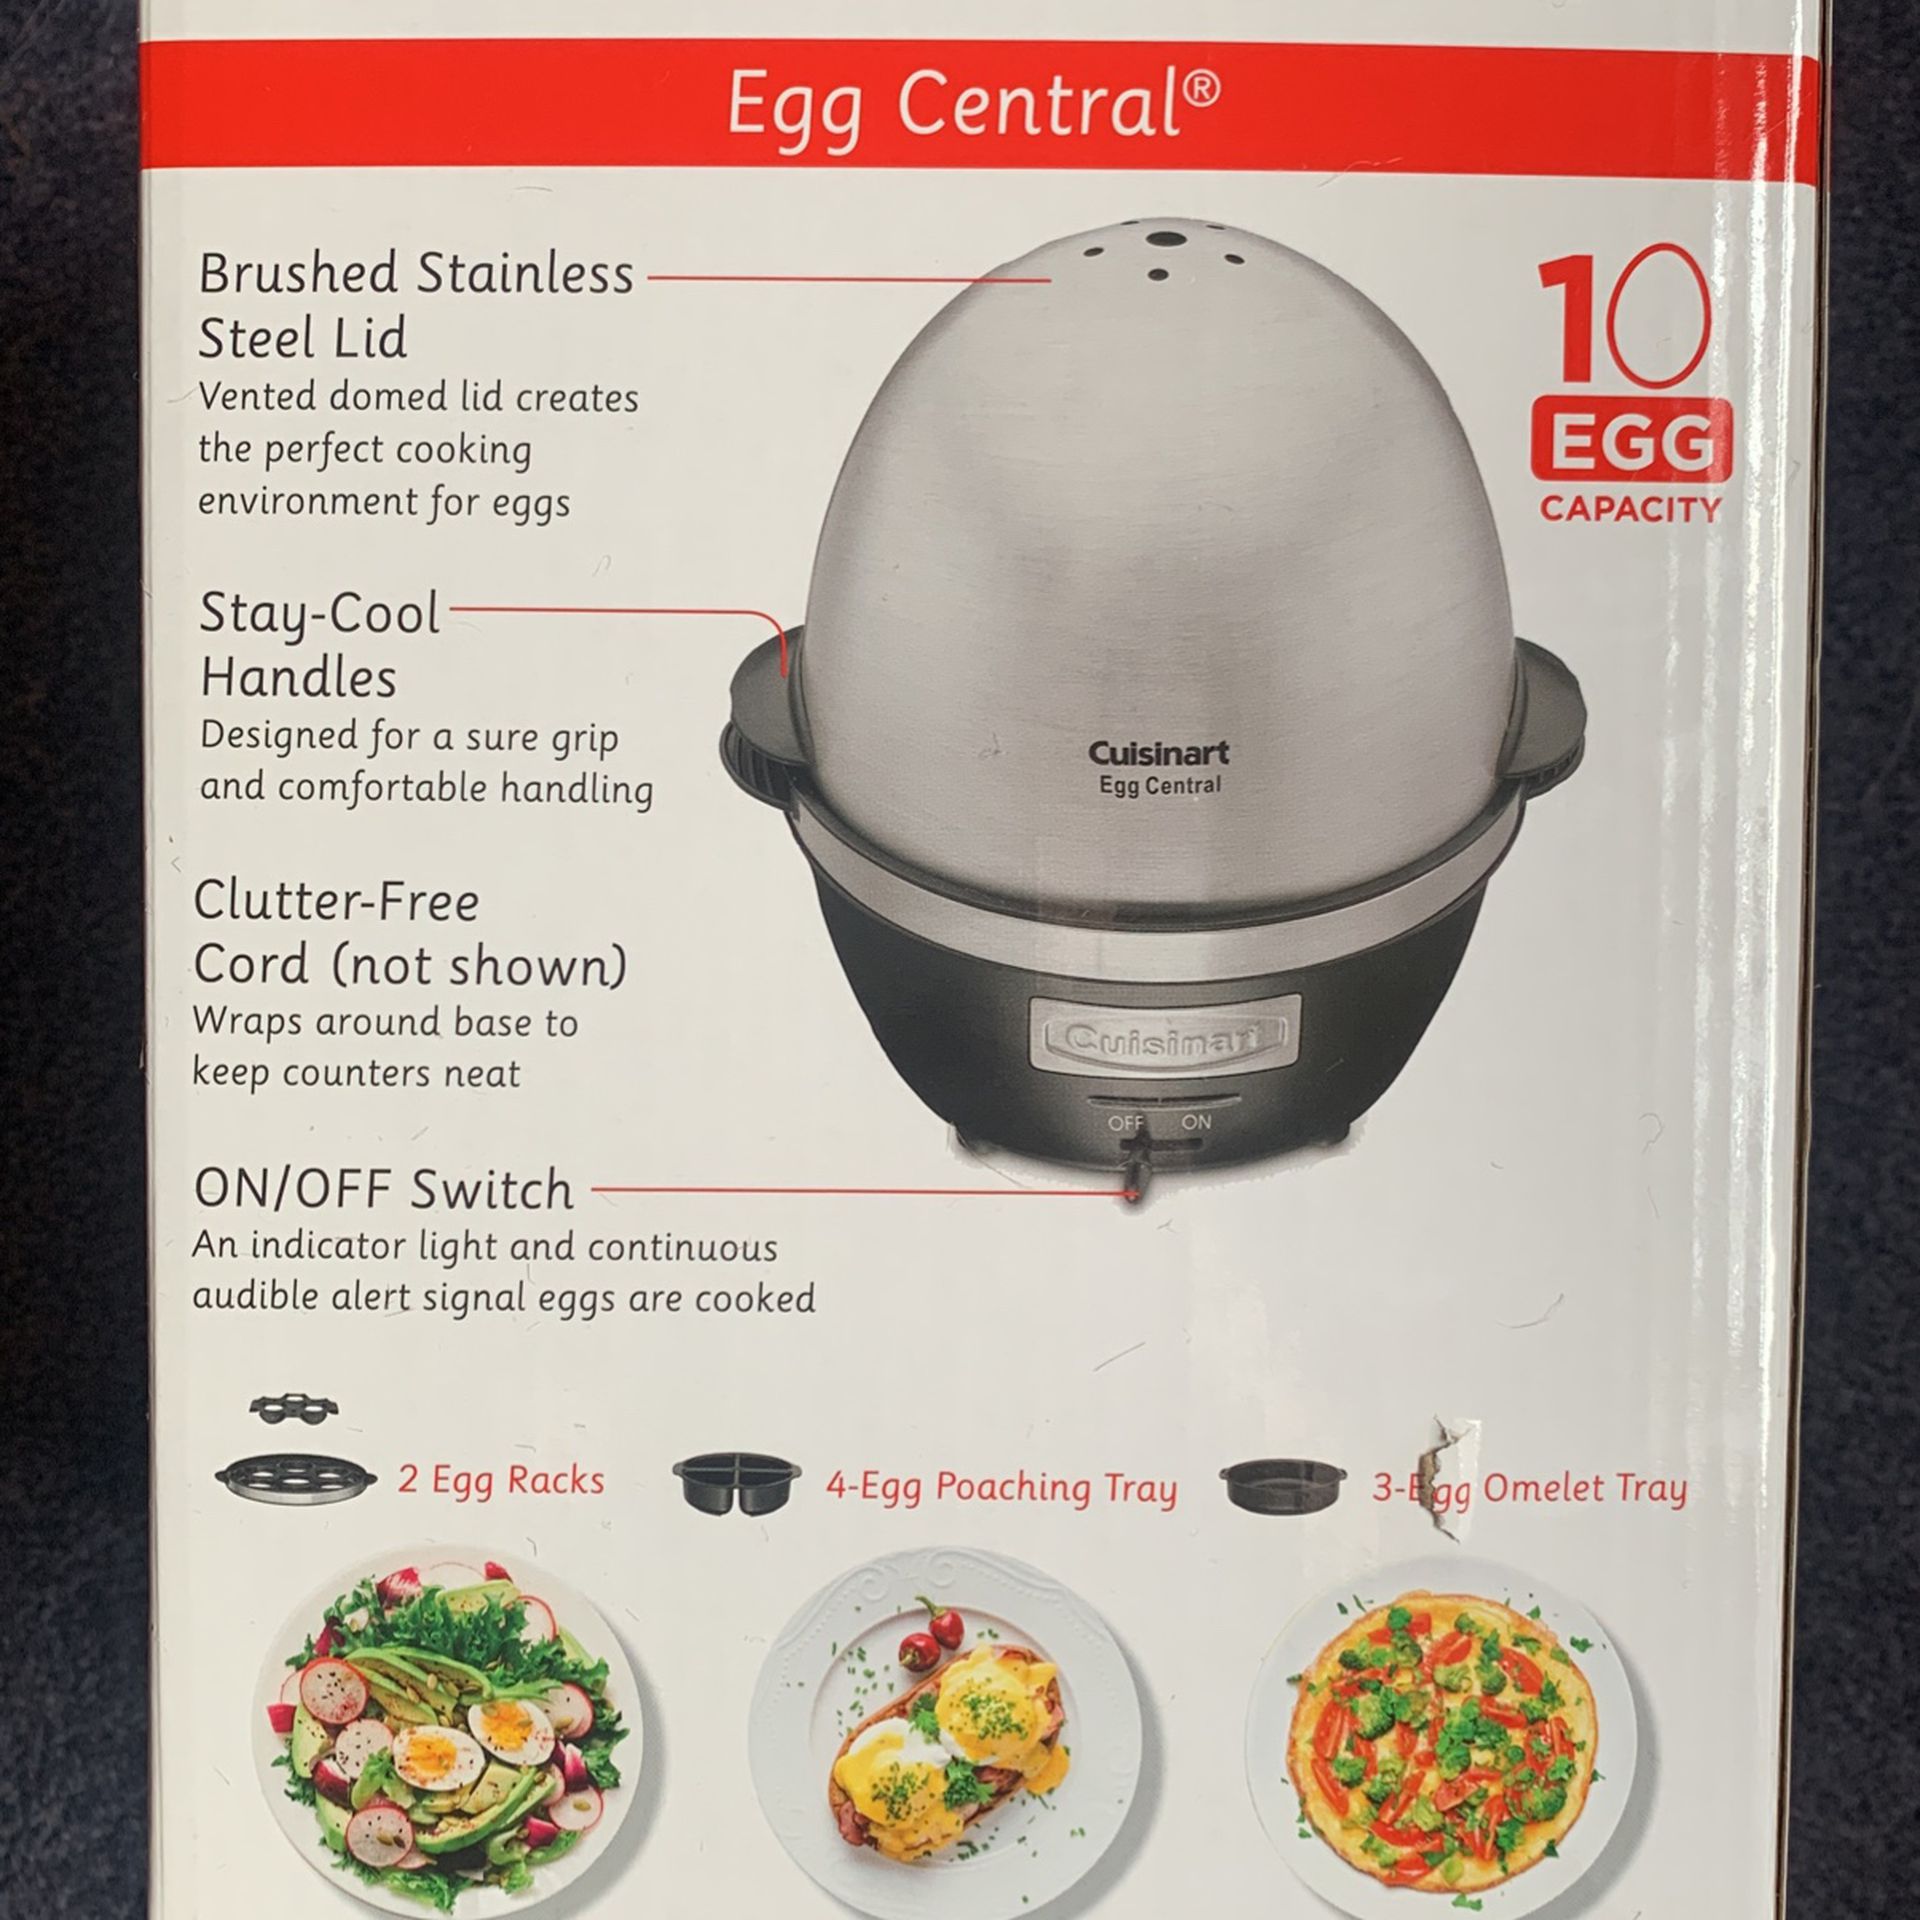 Cuisinart CEC-10 Egg Central Egg Cooker/Poacher in Brushed Stainless Steel